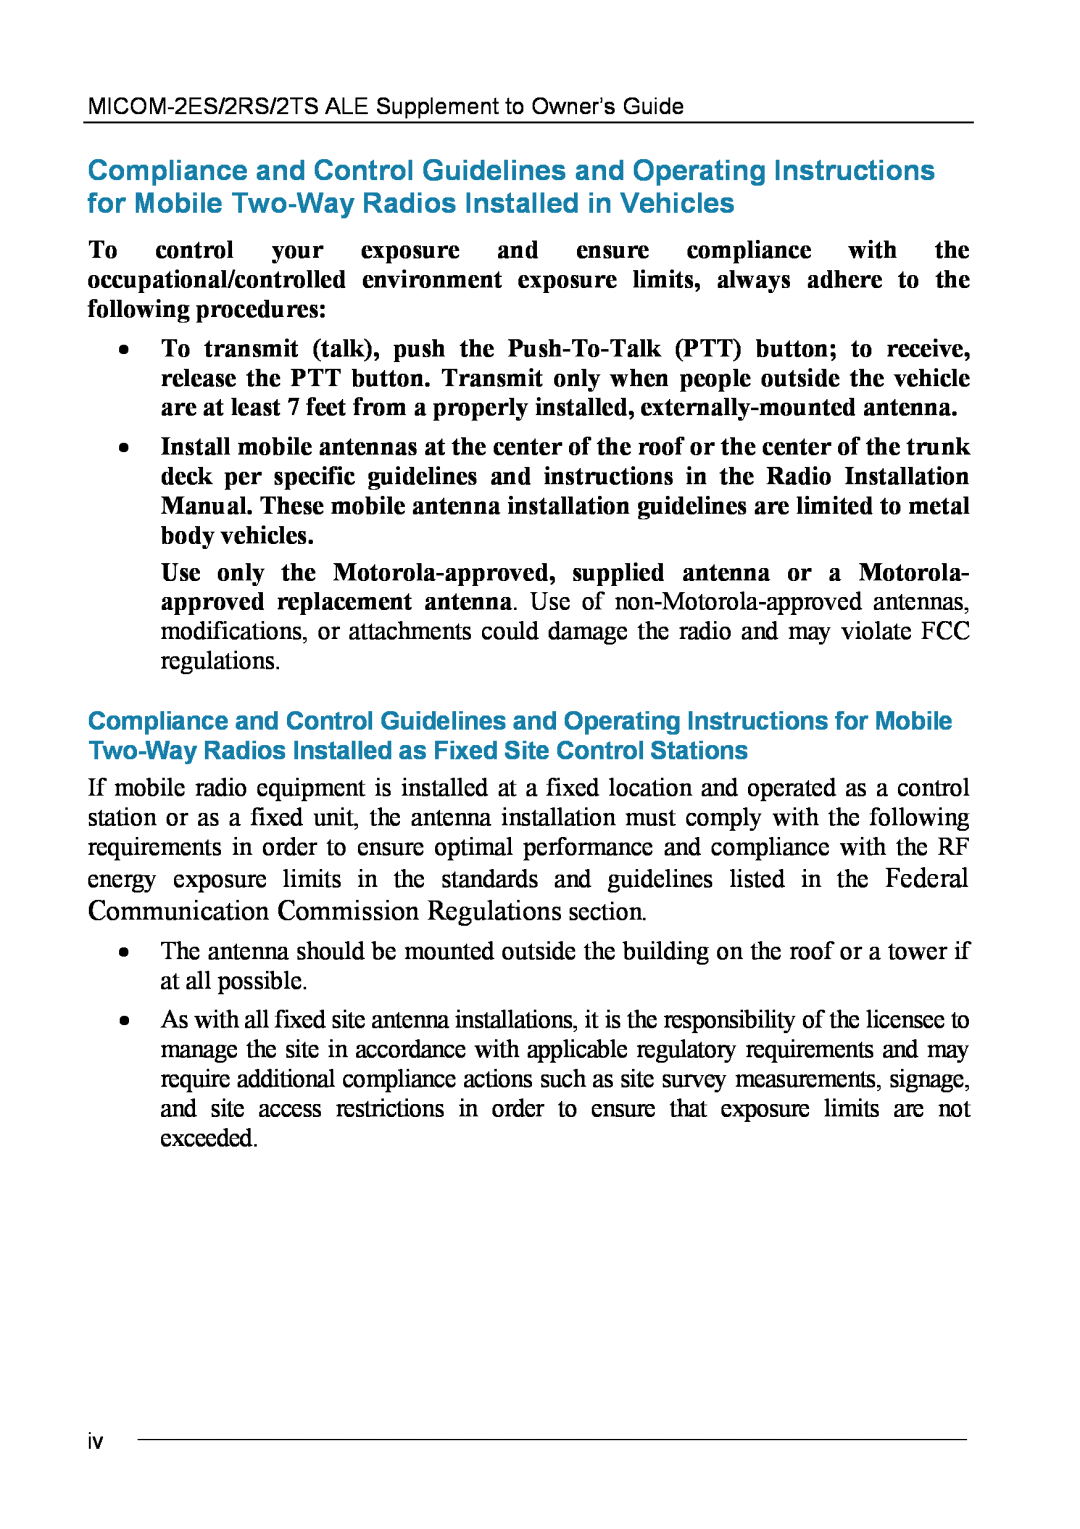 Motorola MICOM-2ES/2RS/2TS ALE manual Communication Commission Regulations section 